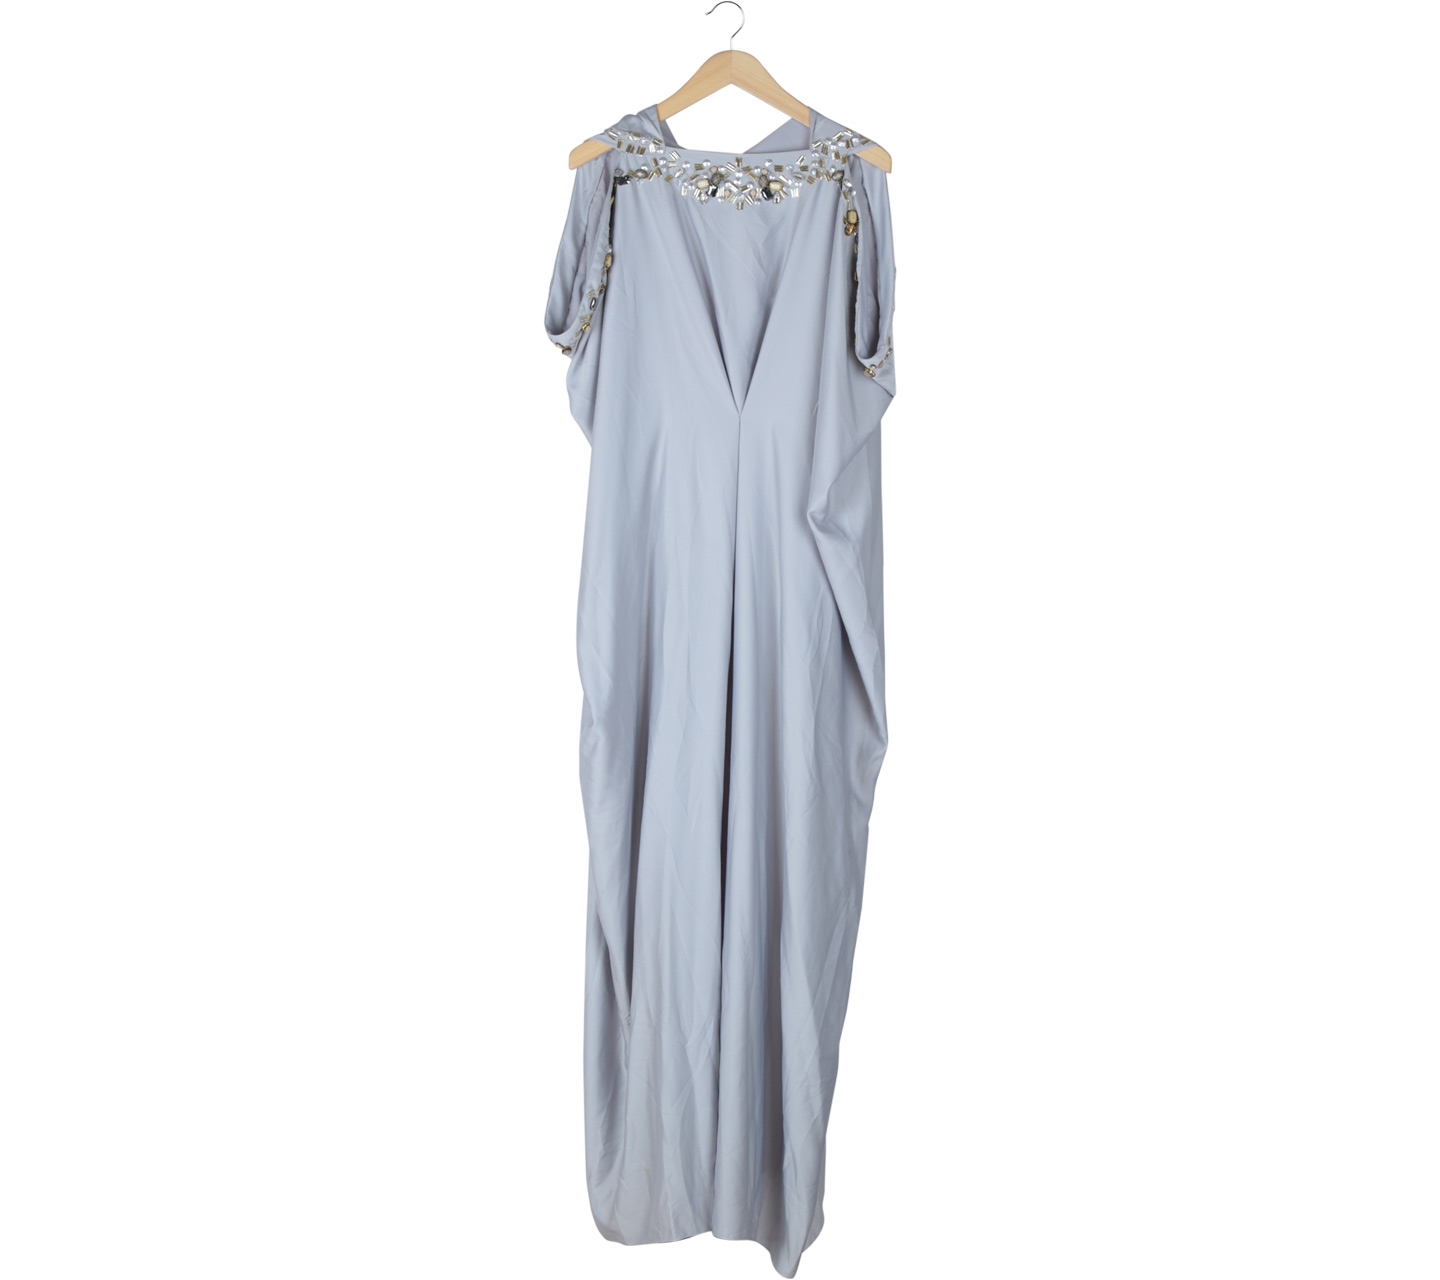 Reshnareshna Grey Beaded Caftan Long Dress